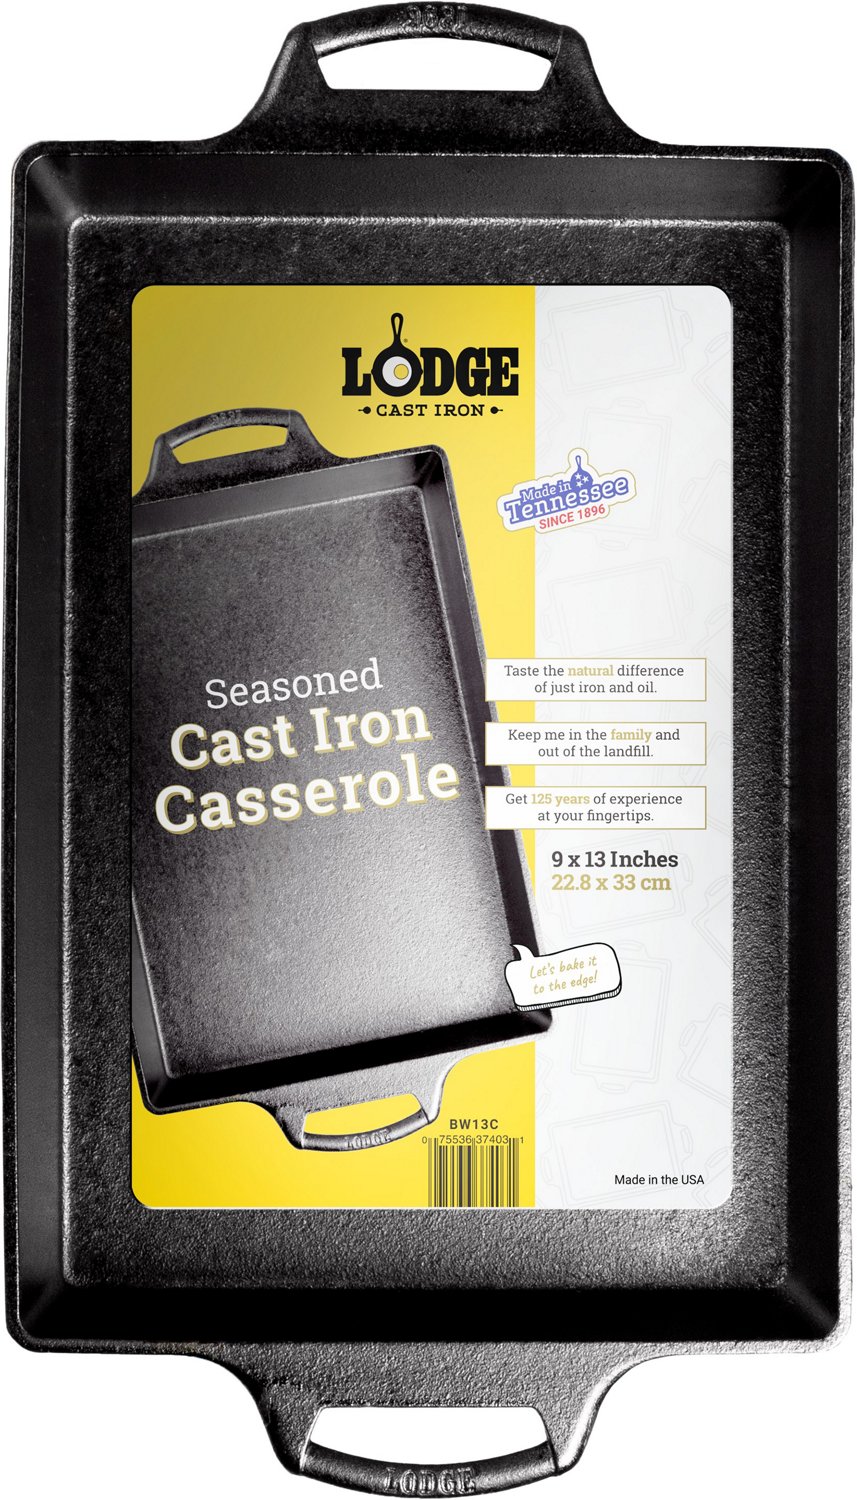 9 x 13 inch Seasoned Cast Iron Casserole